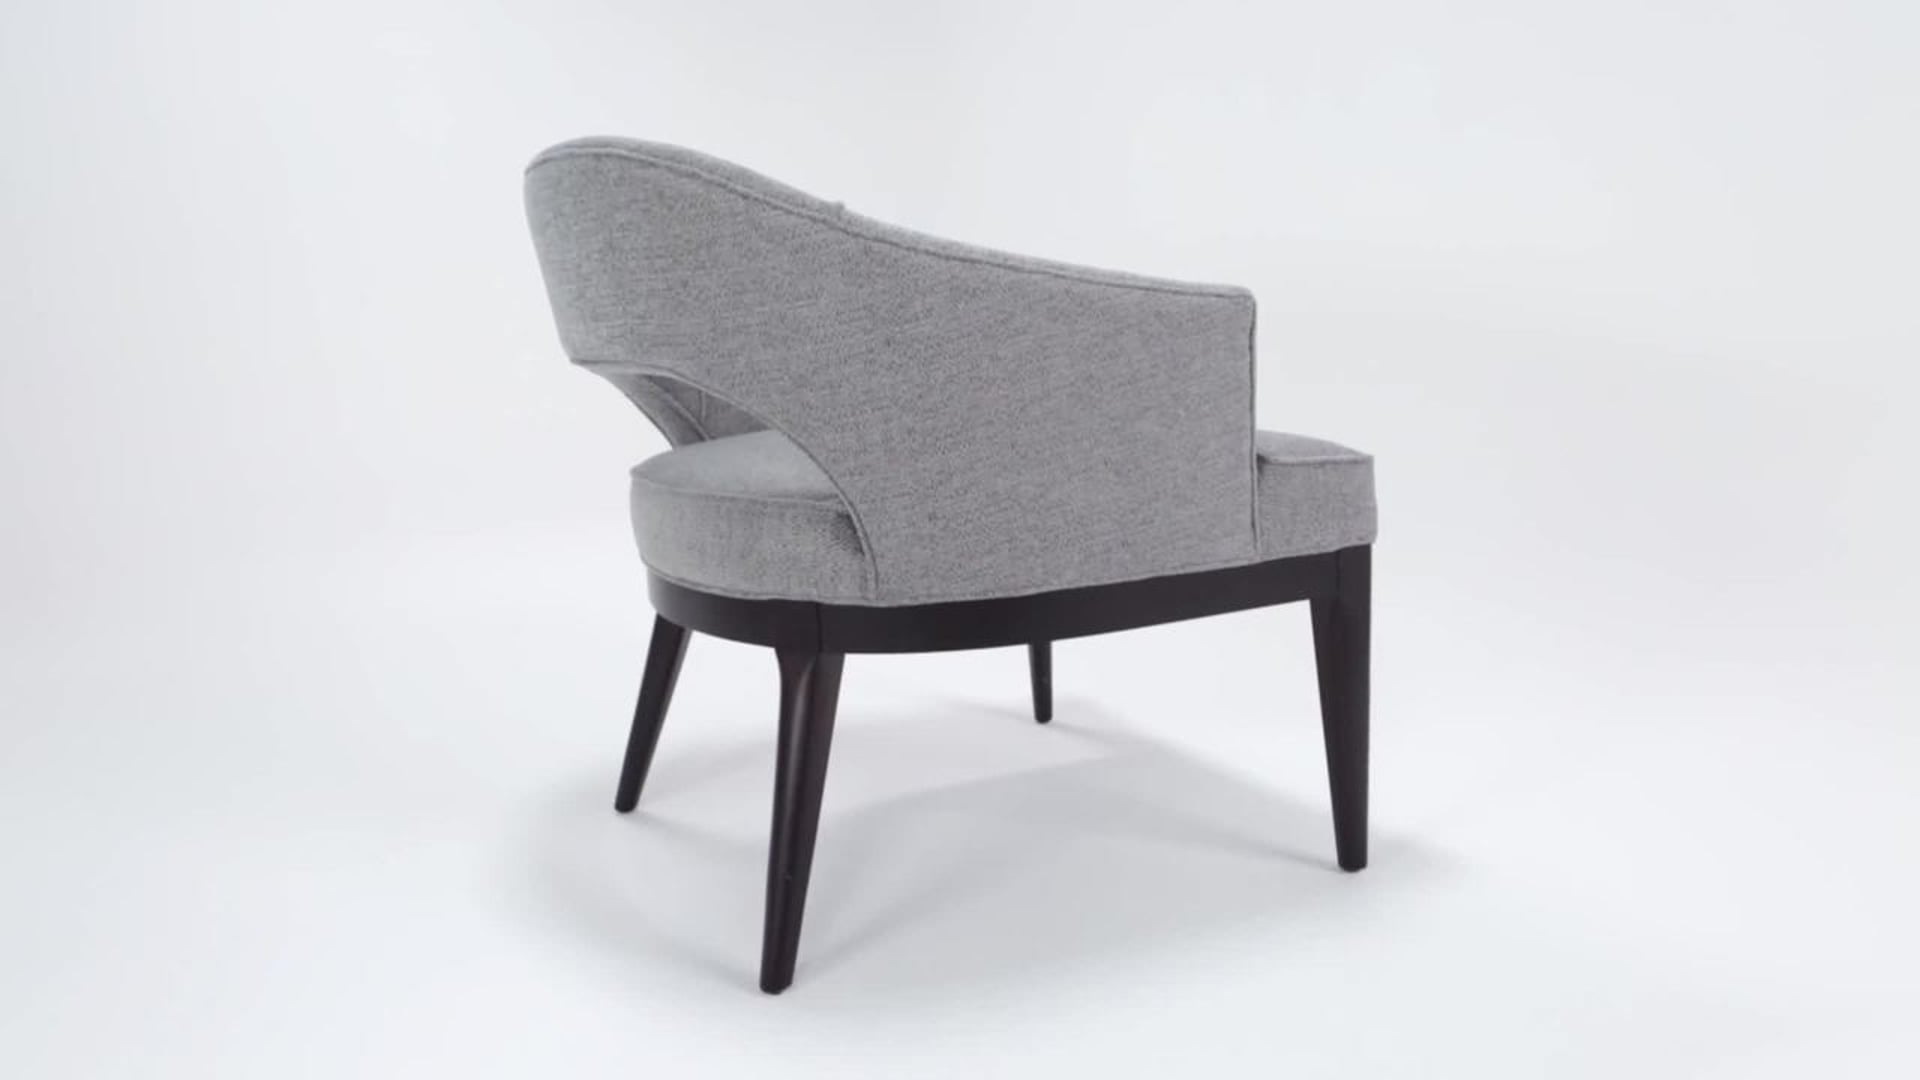 Mallory 29" Mid Century Modern Tub Chair, Gray Tweed